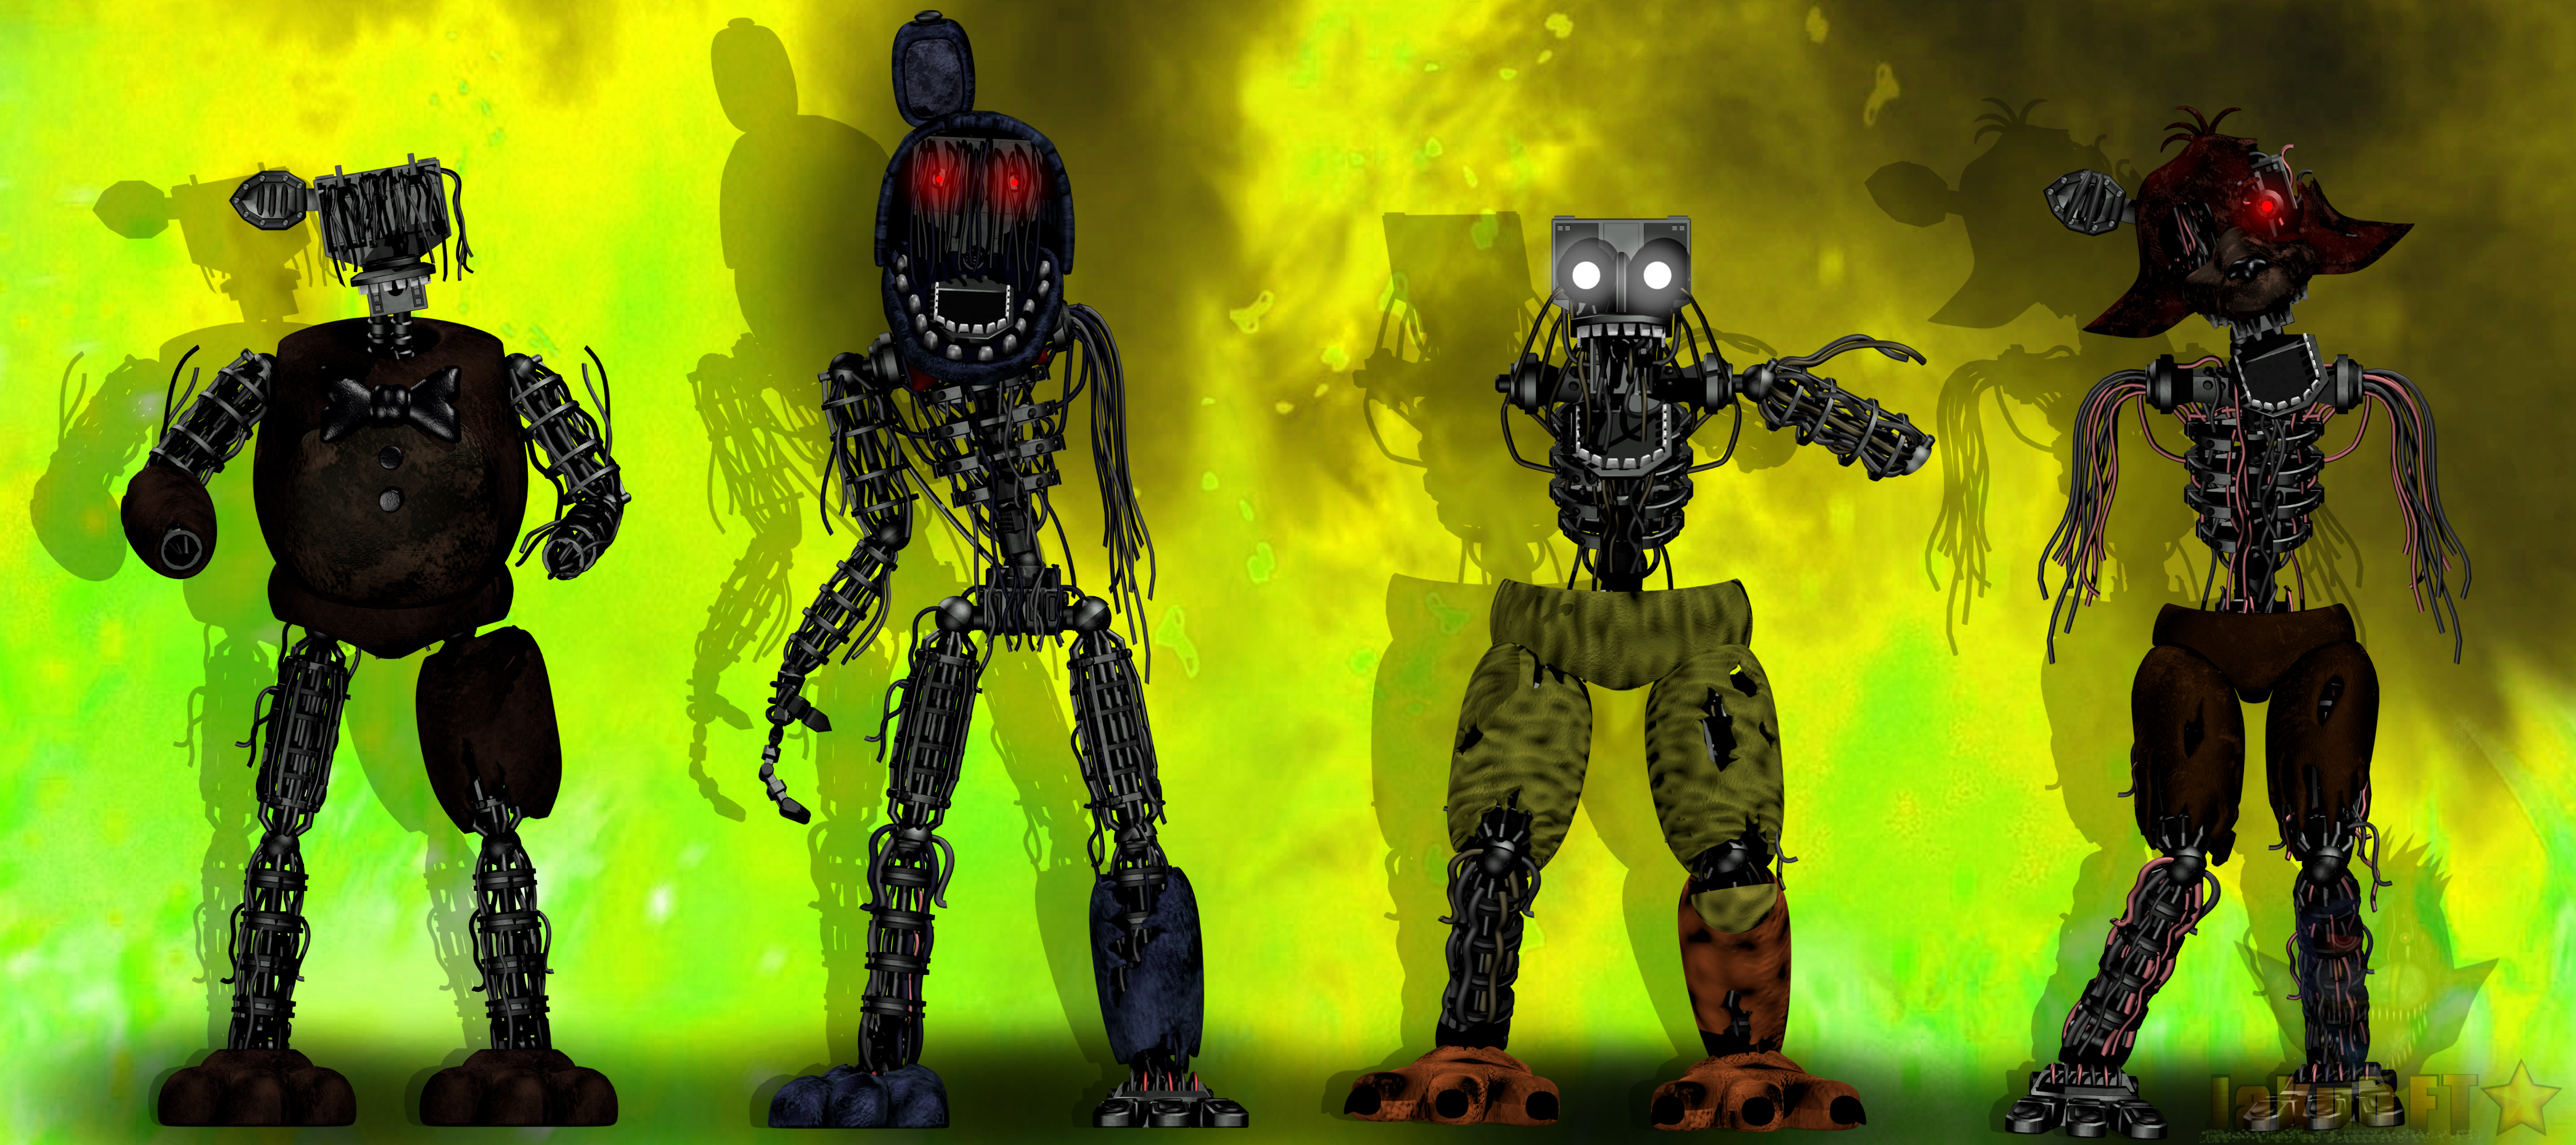 The Obliterated Animatronics. by xXxMLGFNAFxXx on DeviantArt